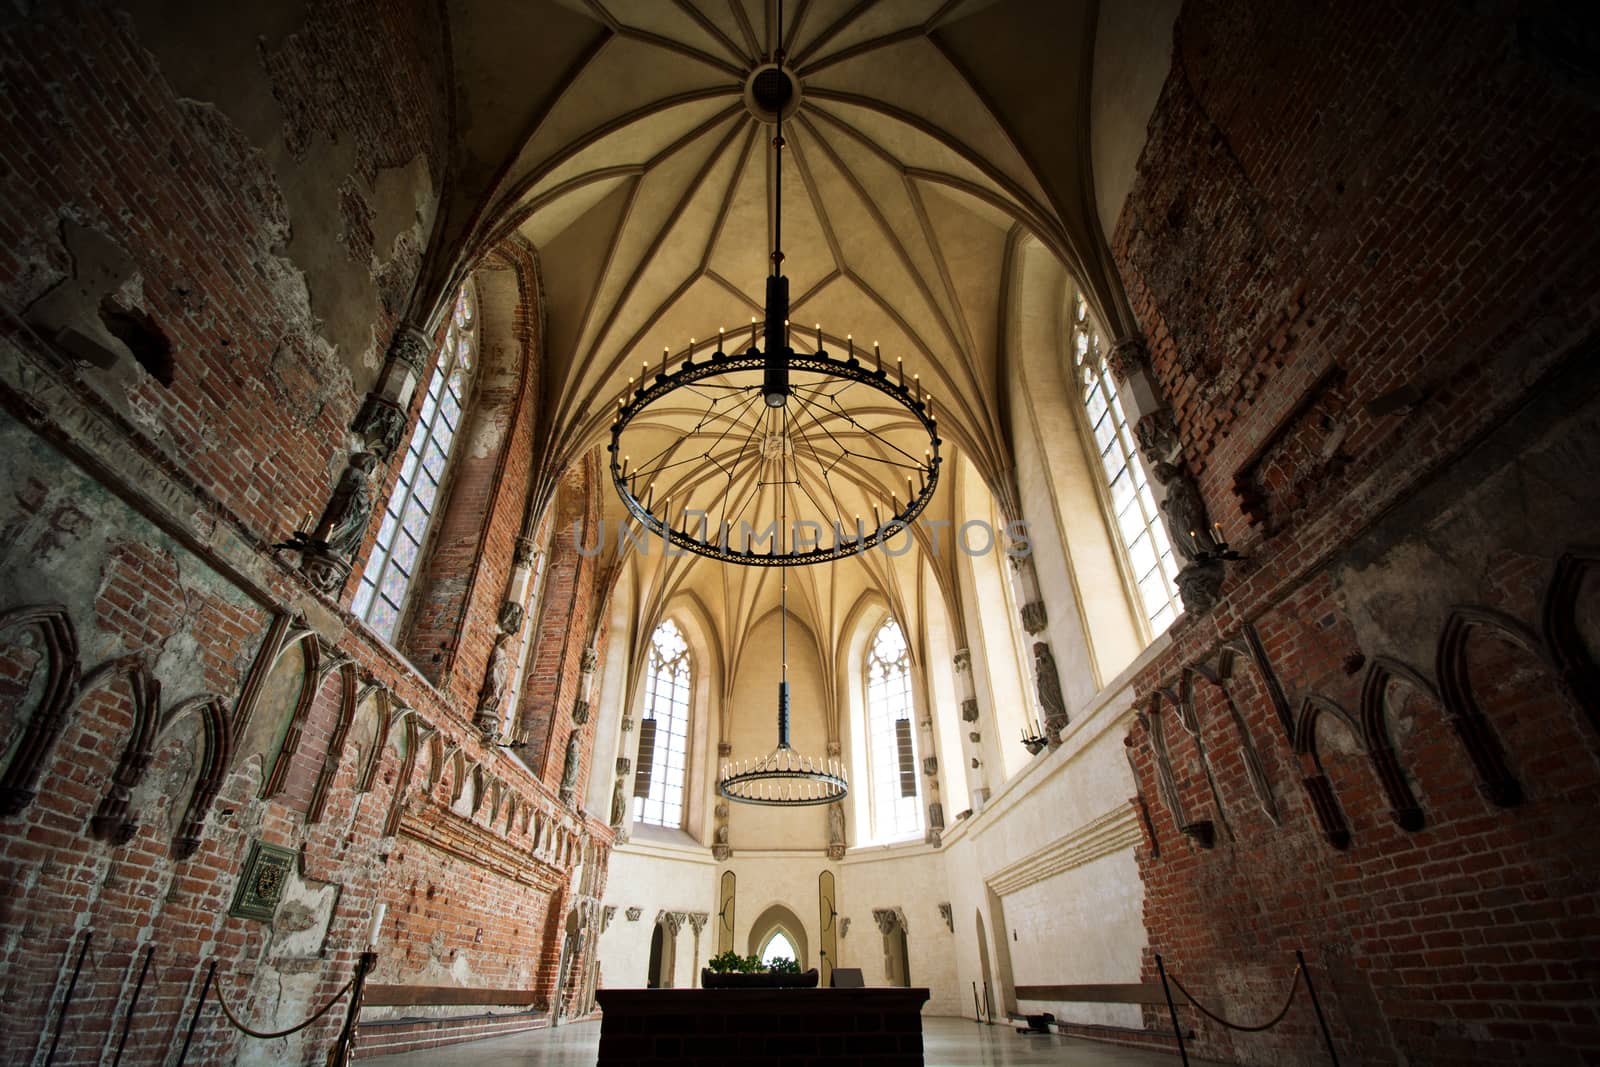 Inside old medieval cathedral in Malbork castle, Poland.